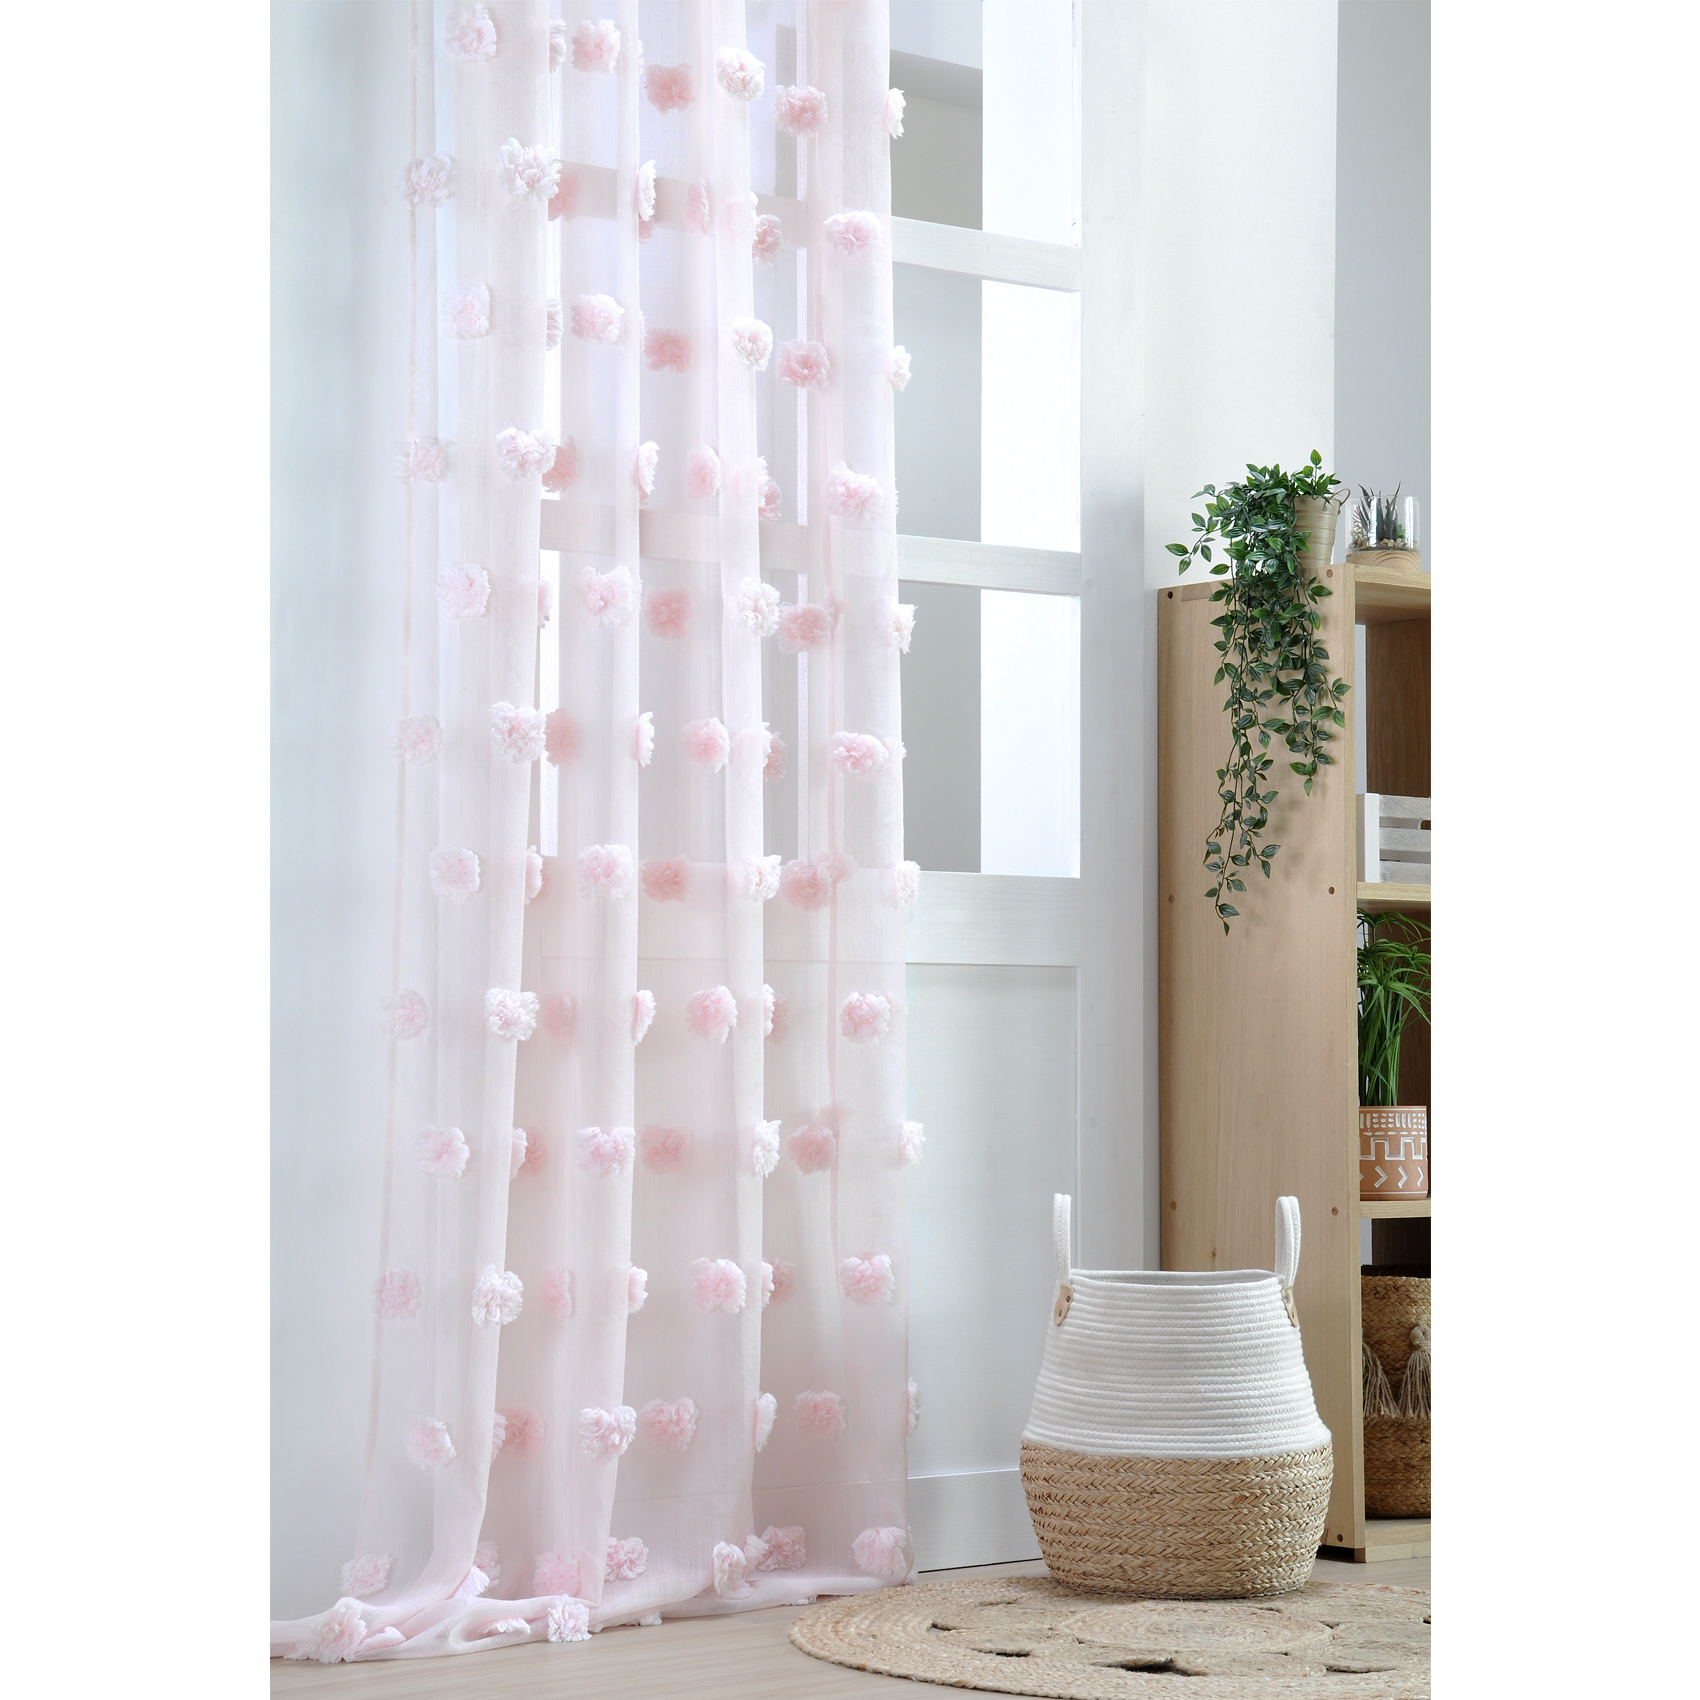 Voilage fantaisie à pompons polyester rose clair 140x260 cm